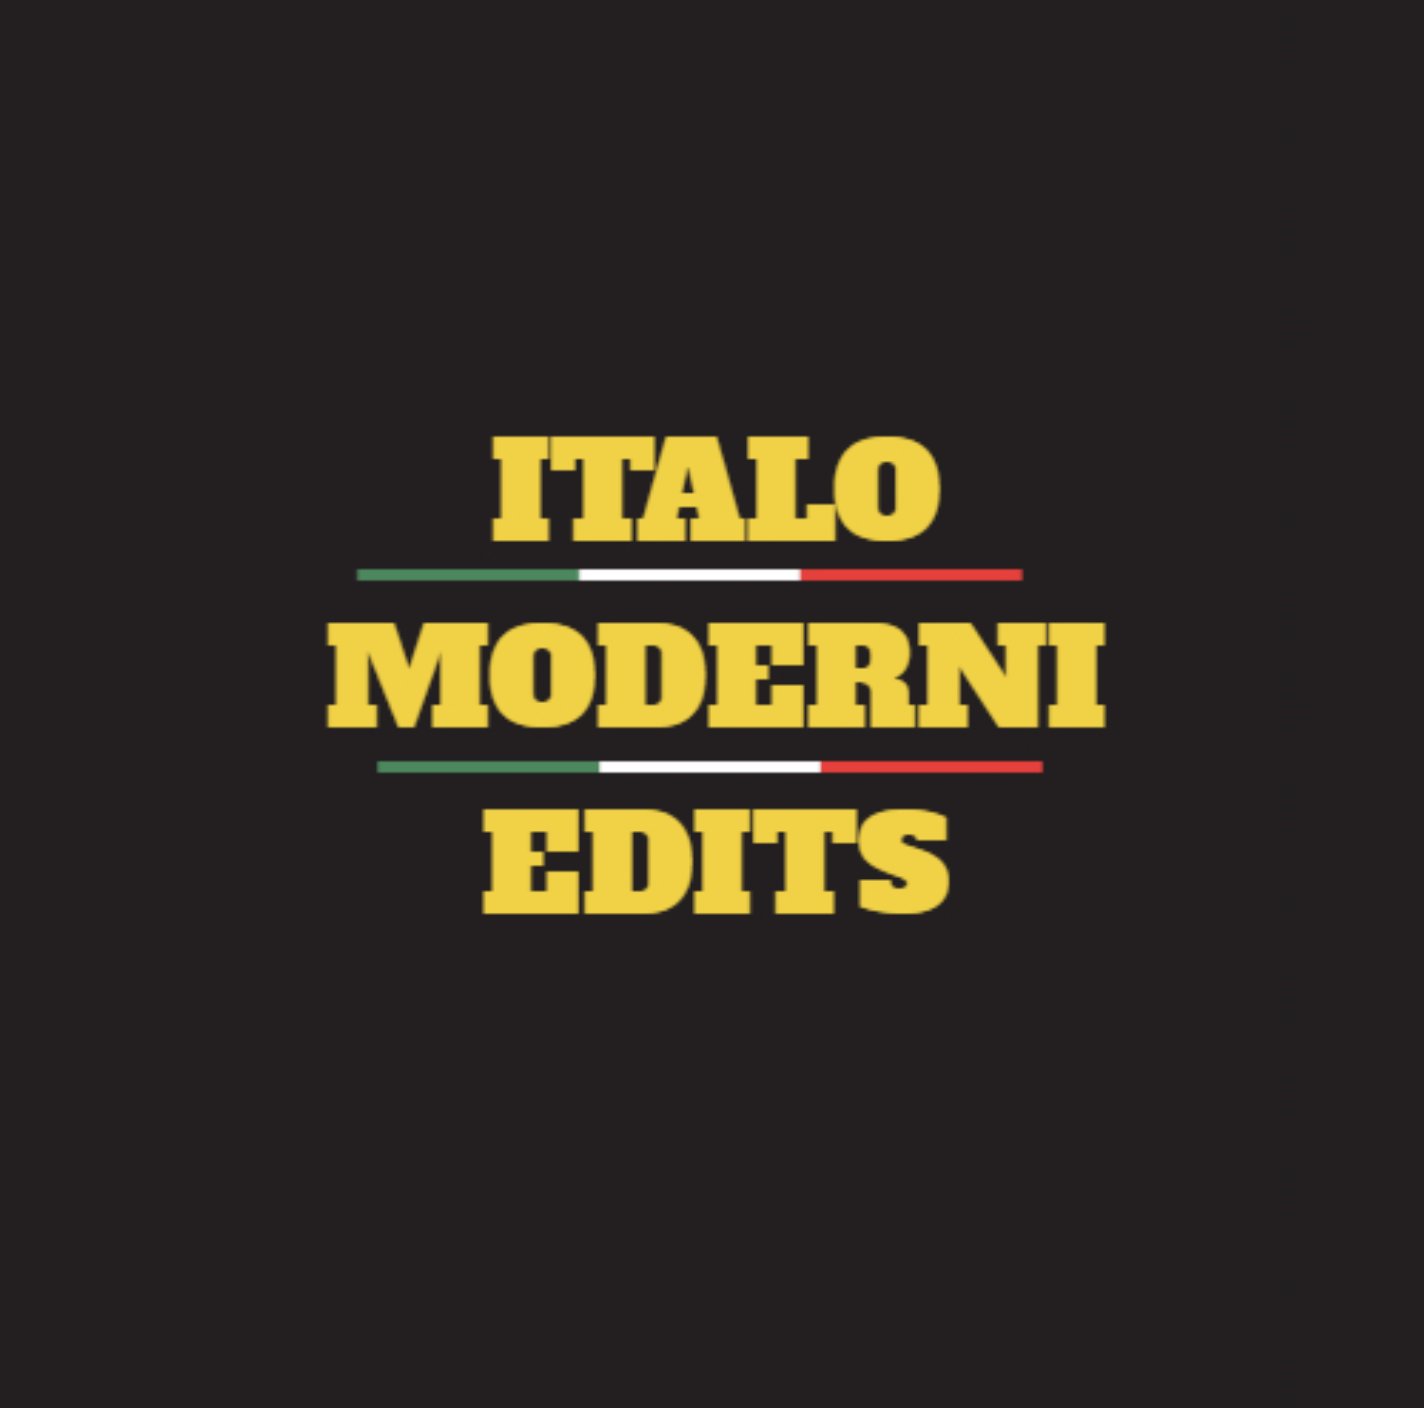 Gang challenger. Italo moderni Edits.